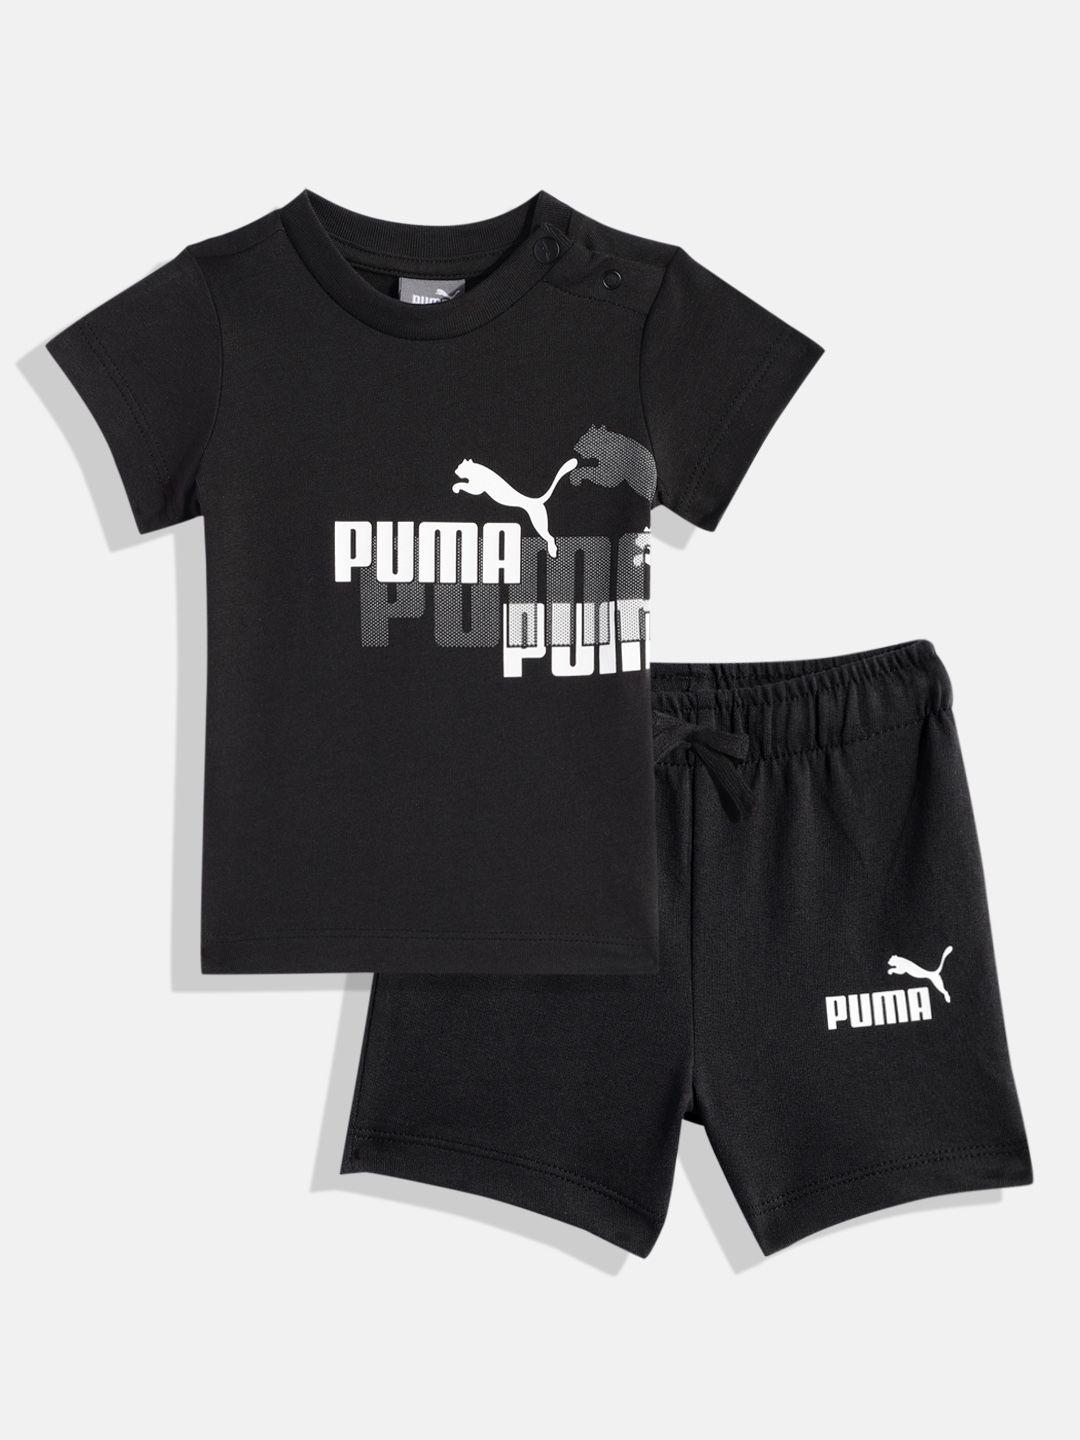 puma kids minicats printed pure cotton t-shirt with shorts